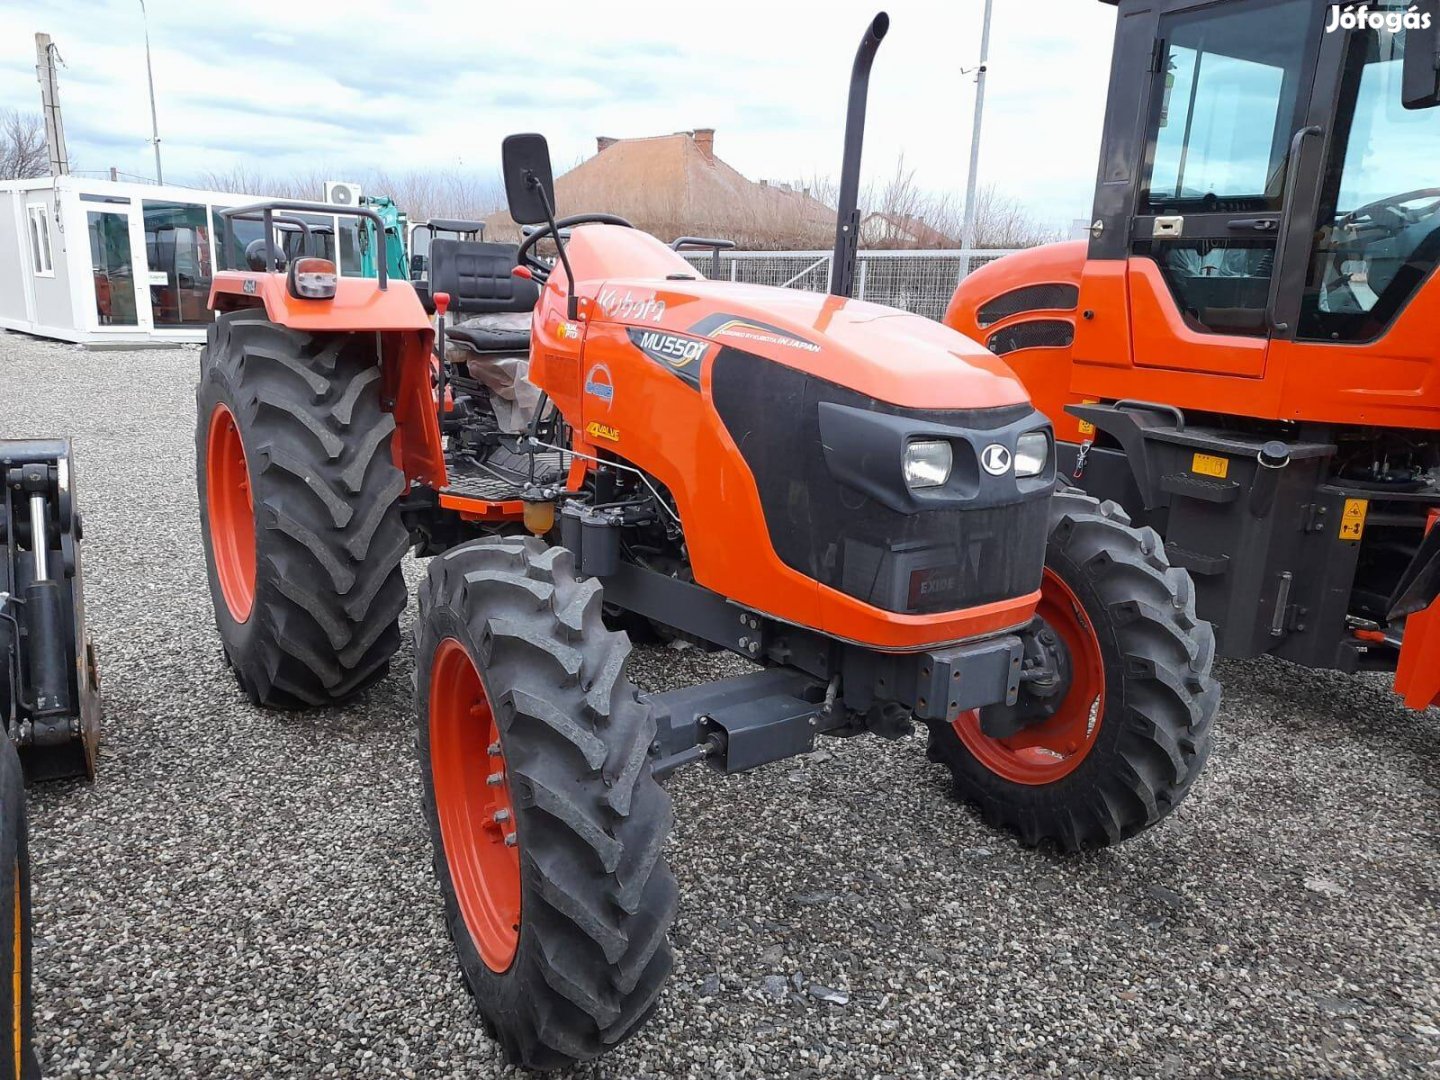 Kubota MU5501 traktor - 55 LE, 2,4 tonna (új) - Videoval